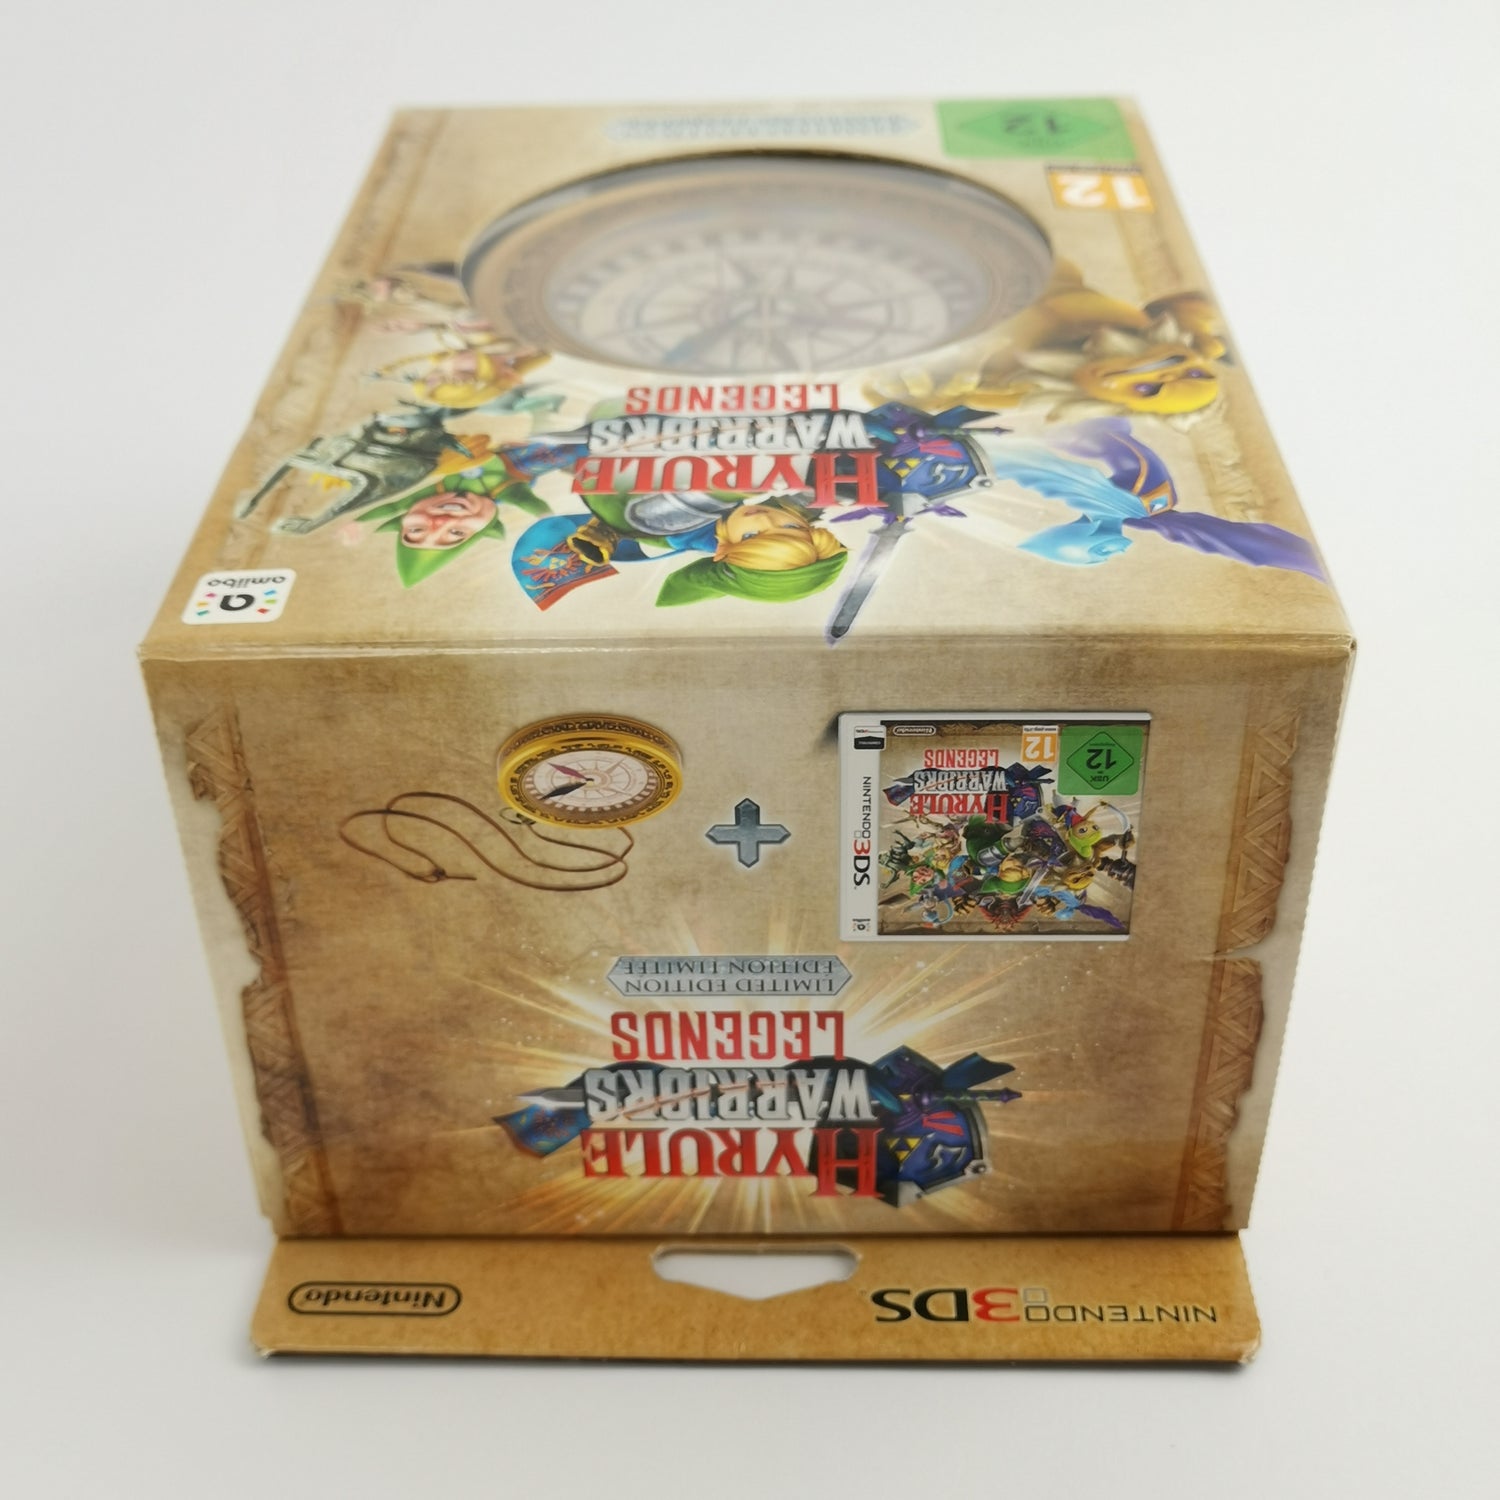 Nintendo 3DS Game: Hyrule Warriors Legends Limited Edition | 2DS comp. OVP PAL